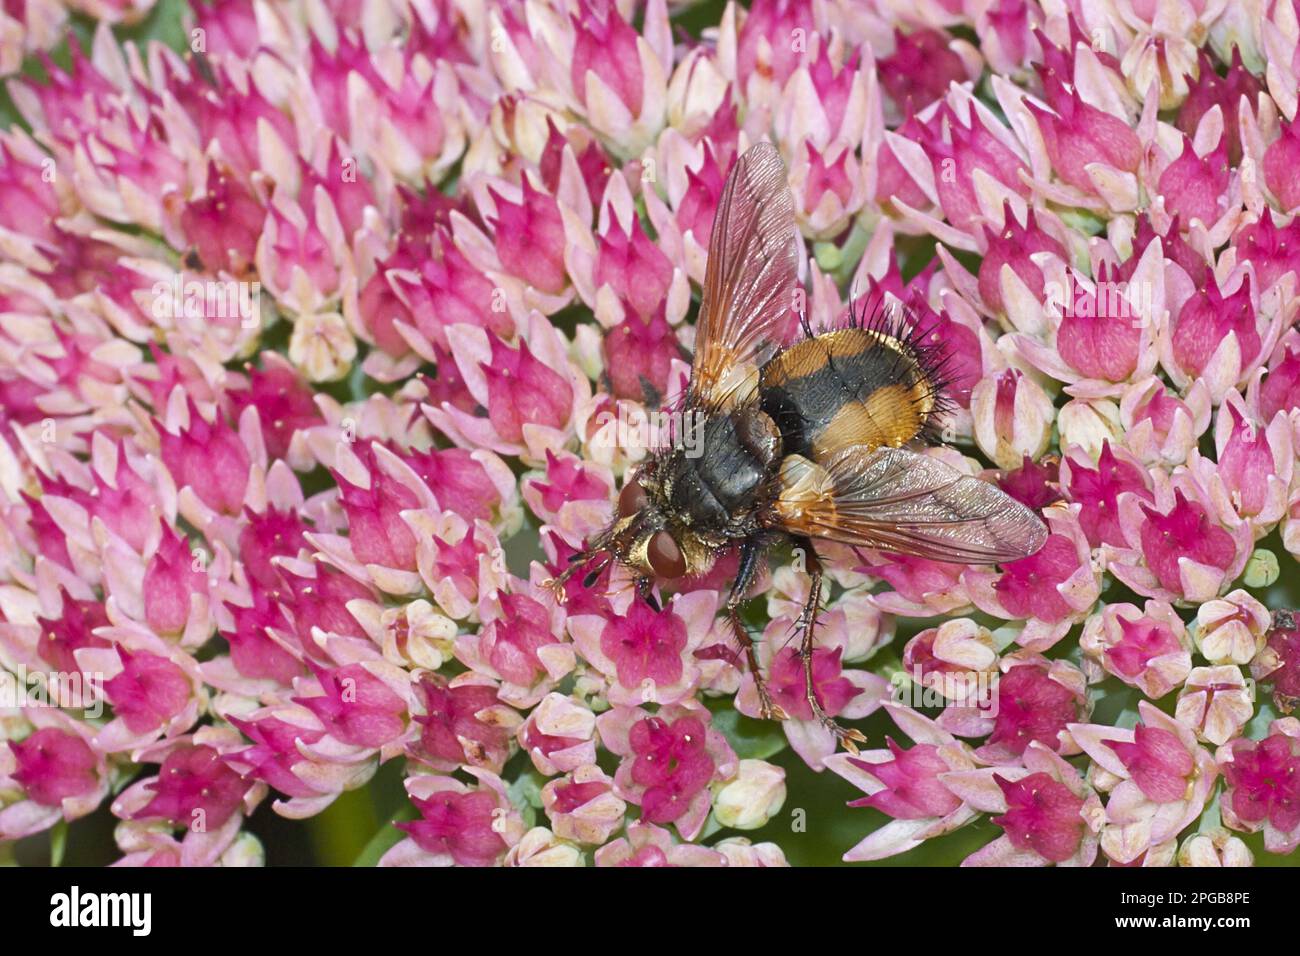 Tachinid Fly (Echinomyia fera) adult, feeding on pollen from Iceplant (Sedum sp.) flowers in garden, Warwickshire, England, United Kingdom Stock Photo